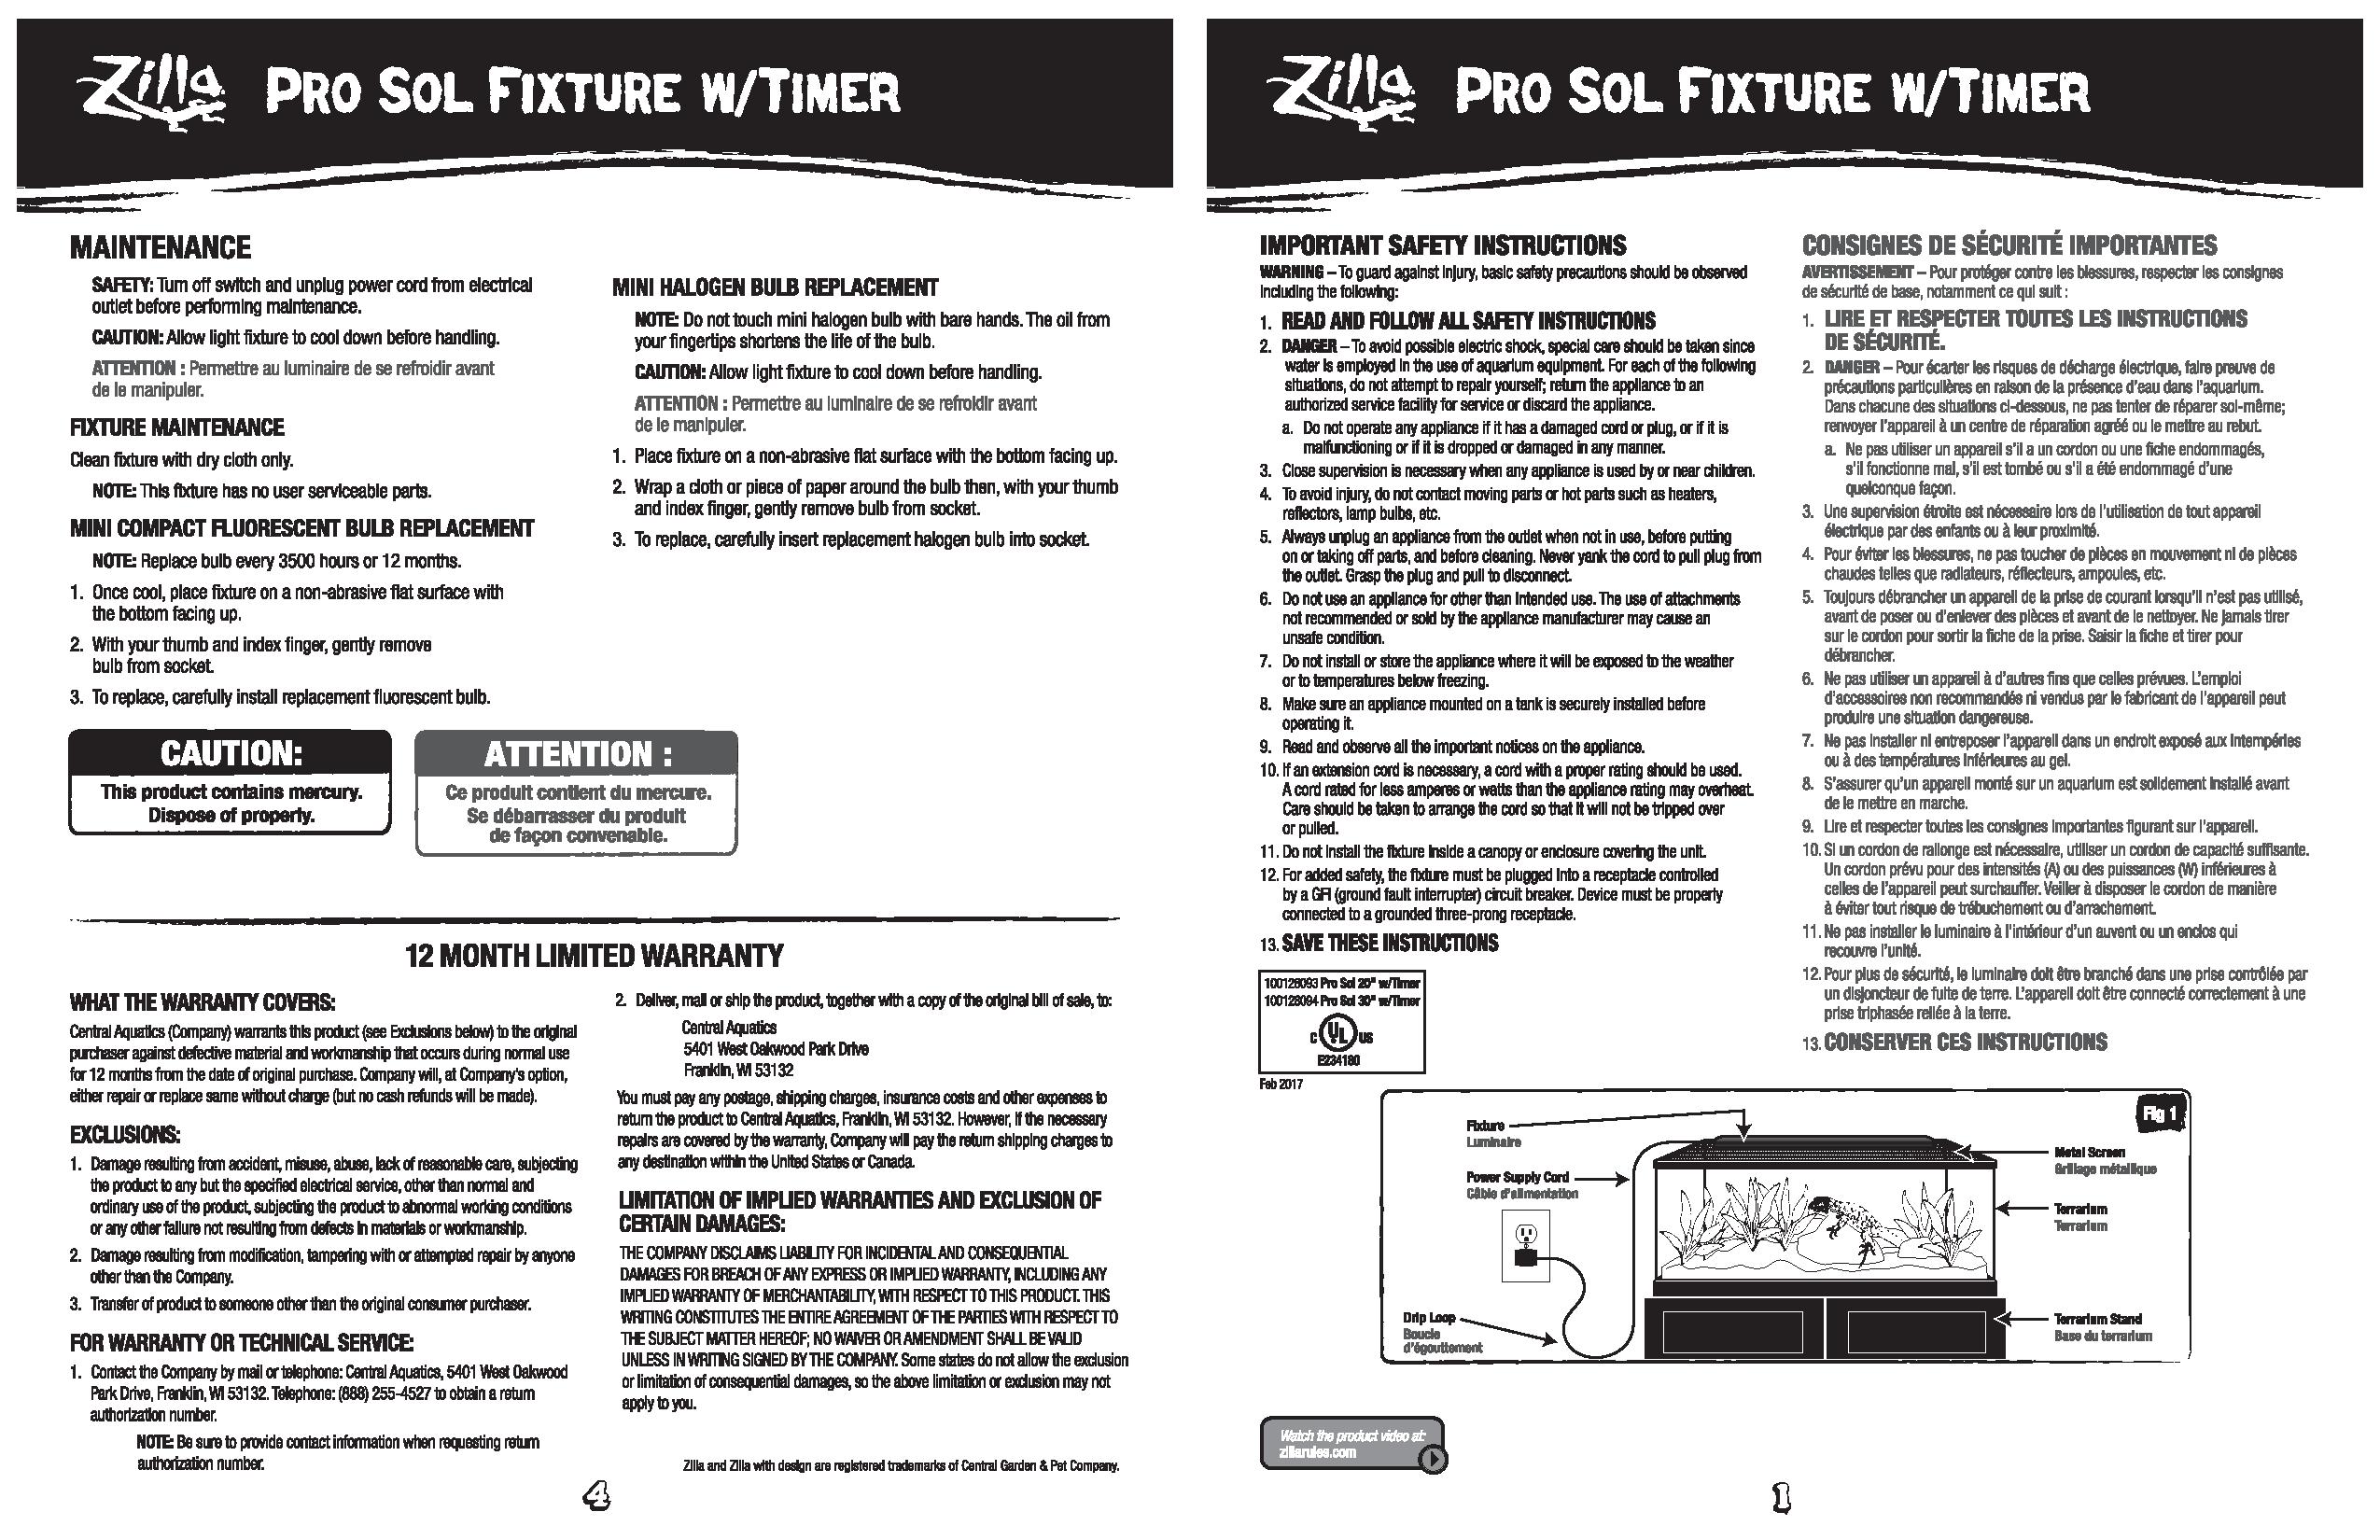 ZL_ProSolwTimer-Instructions_Feb17_hq-page-001